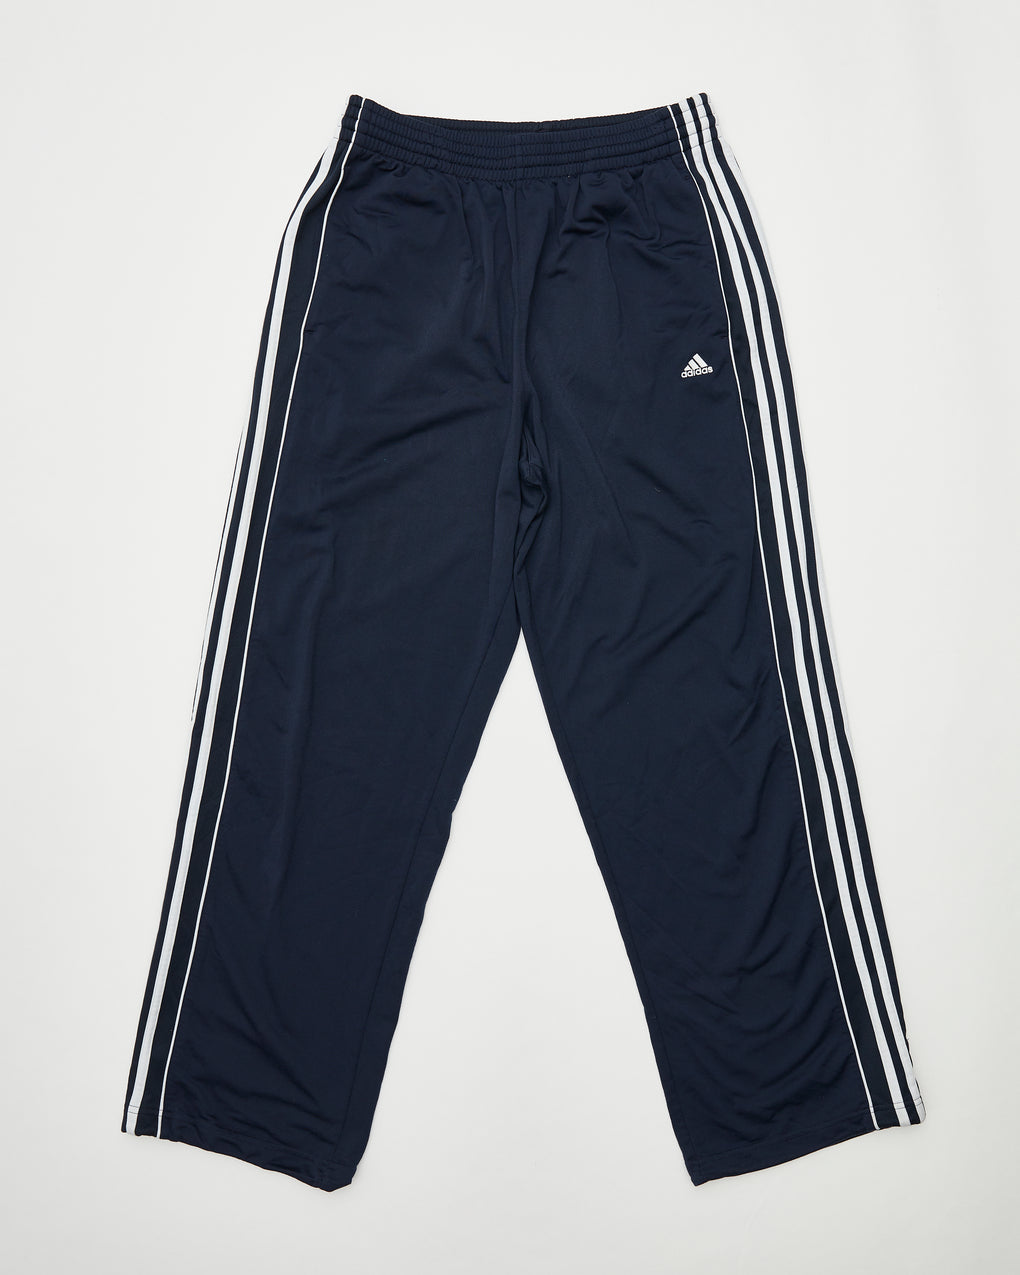 Adidas Navy/White Track Pants (L)